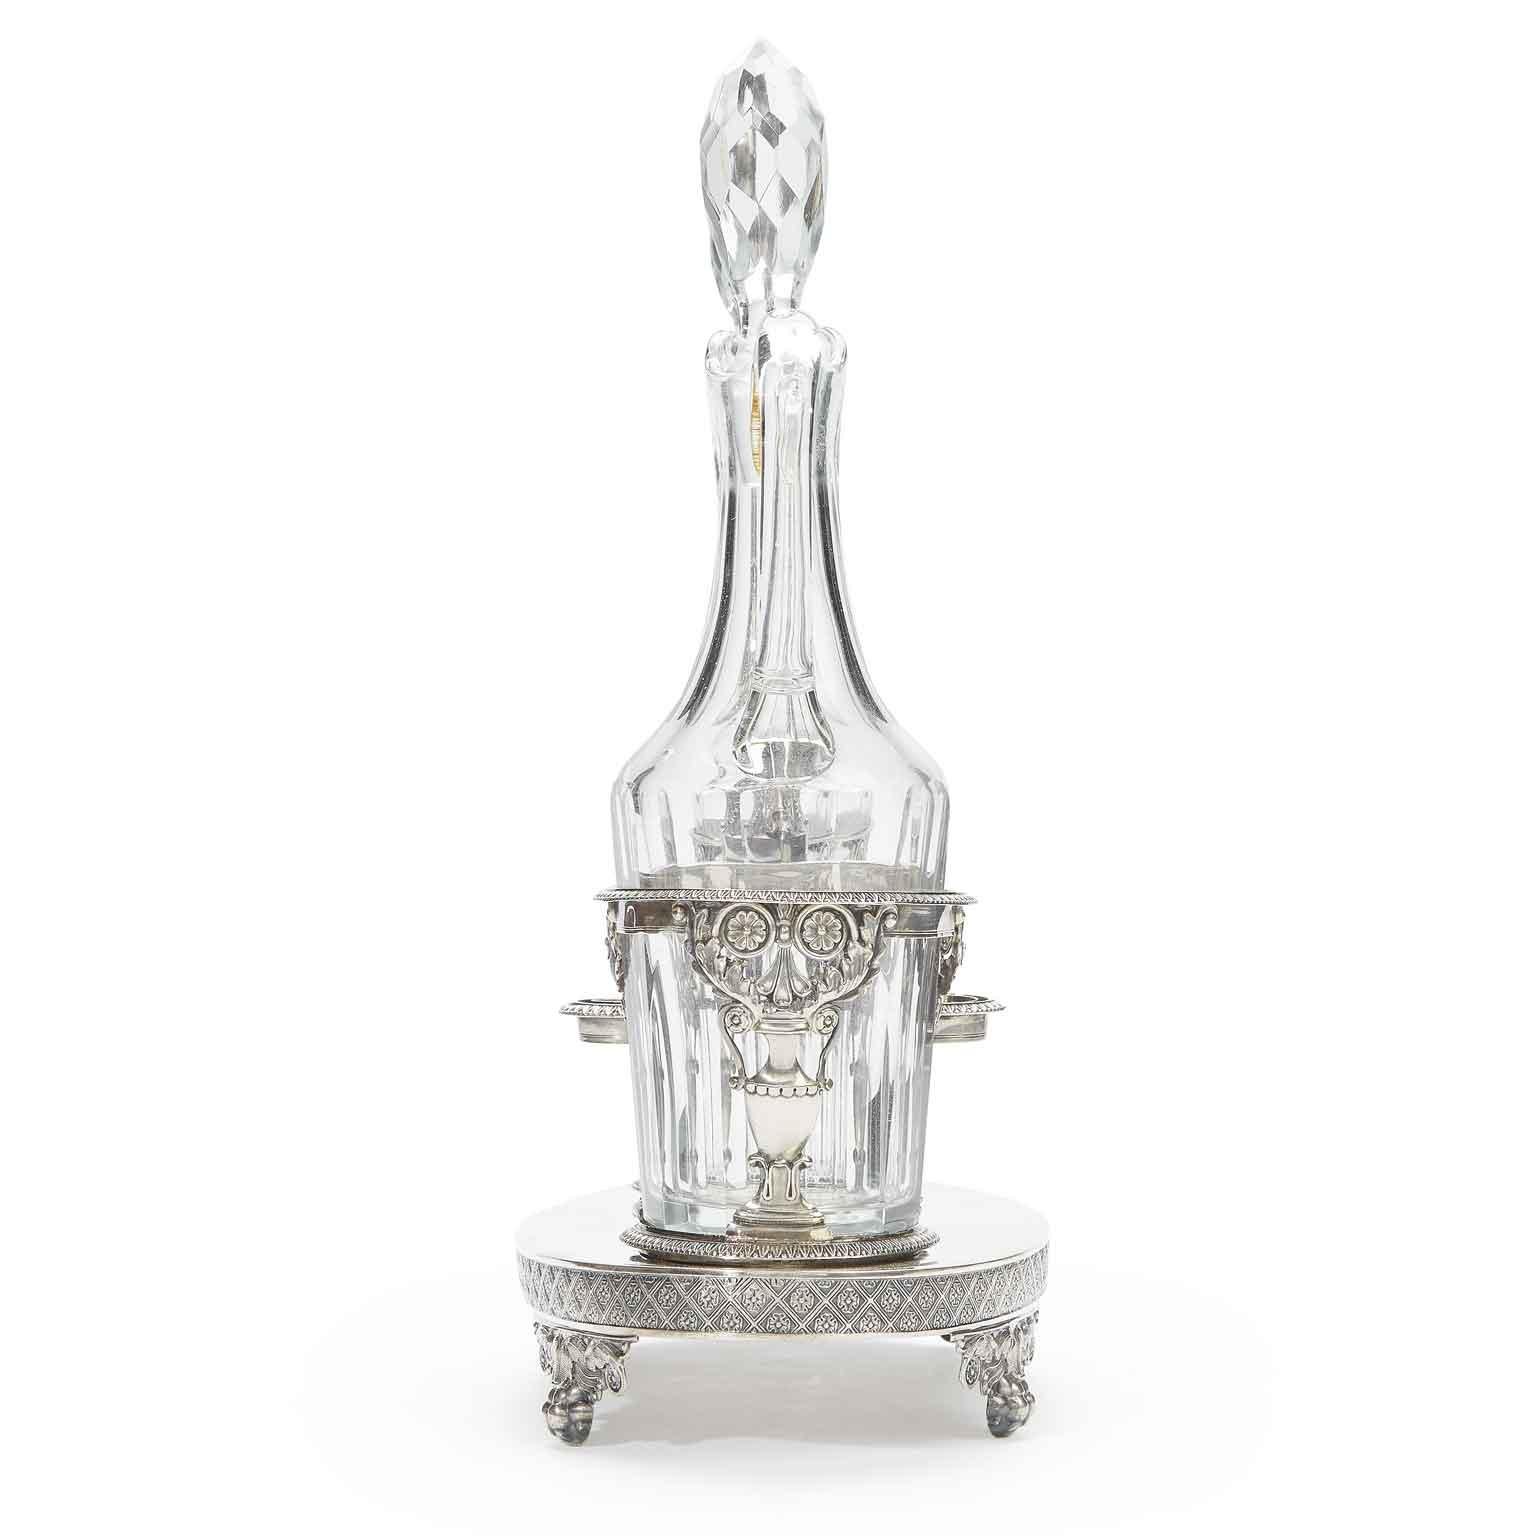 19th Century Neoclassical French Oil and Vinegar Cruet Set Paris Sterling Silver 5